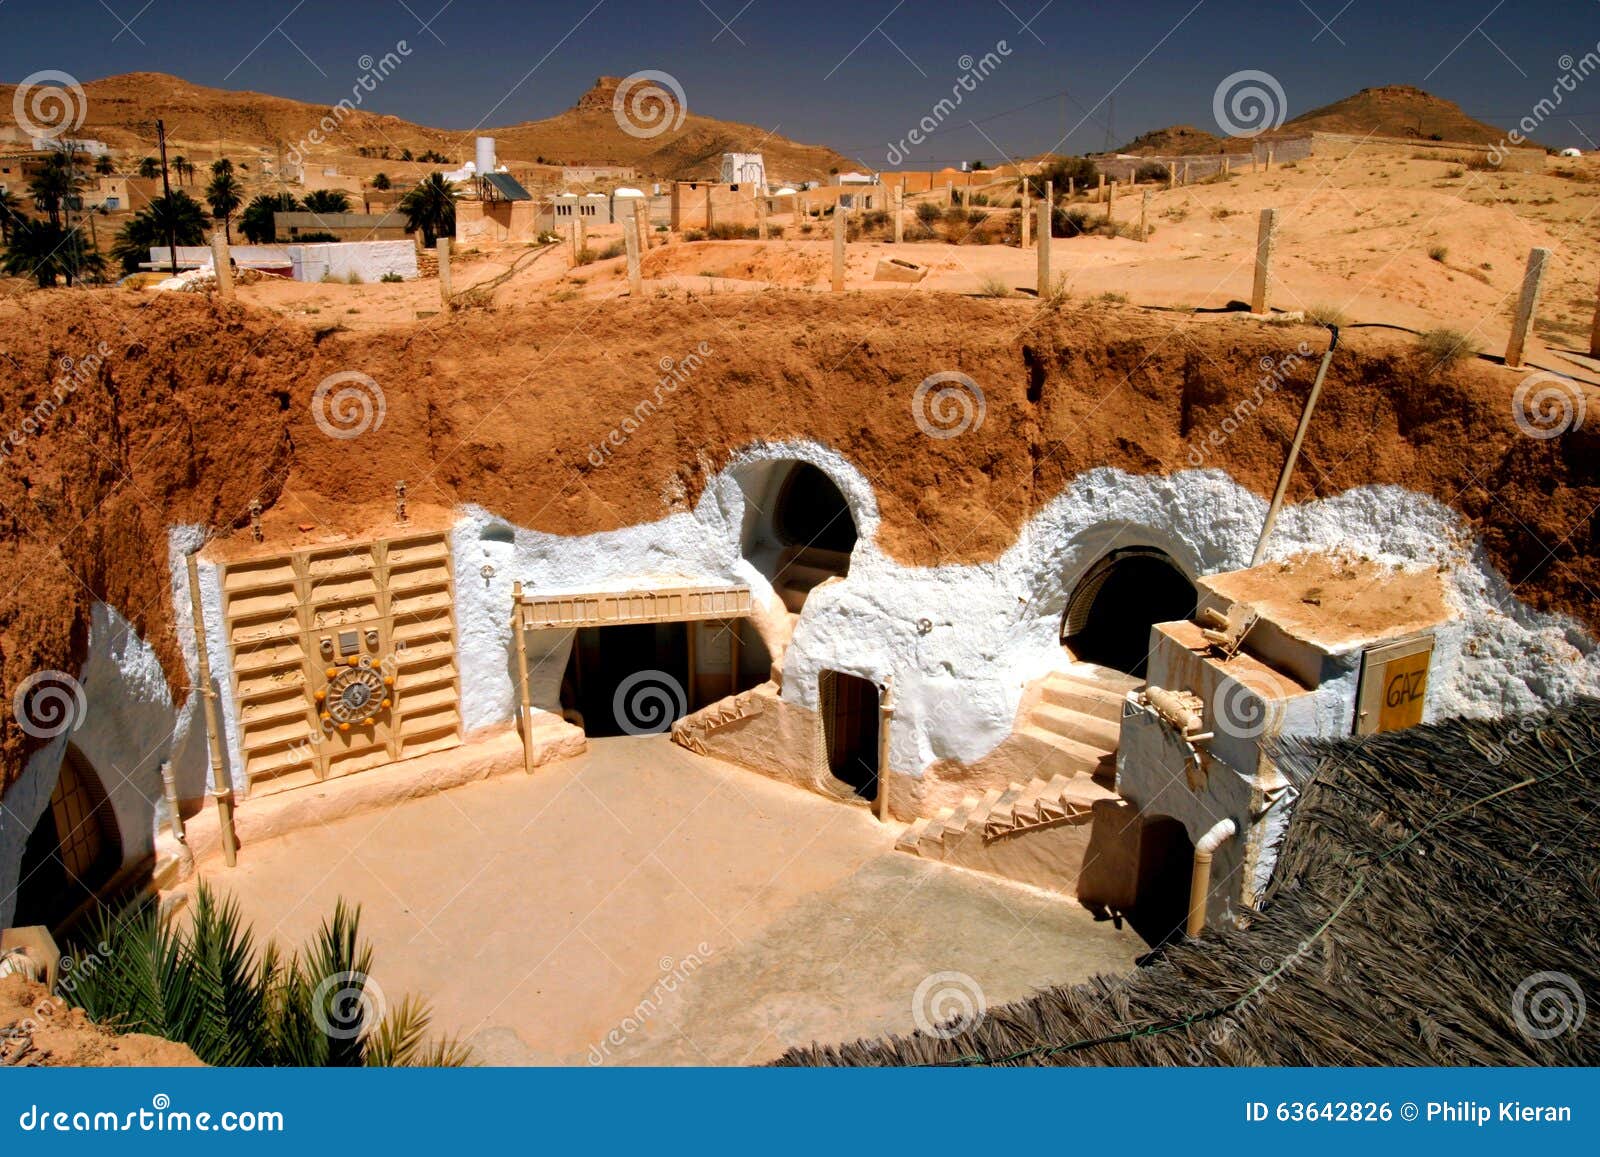 Star wars film set tunisia stock photo. Image of cave - 63642826